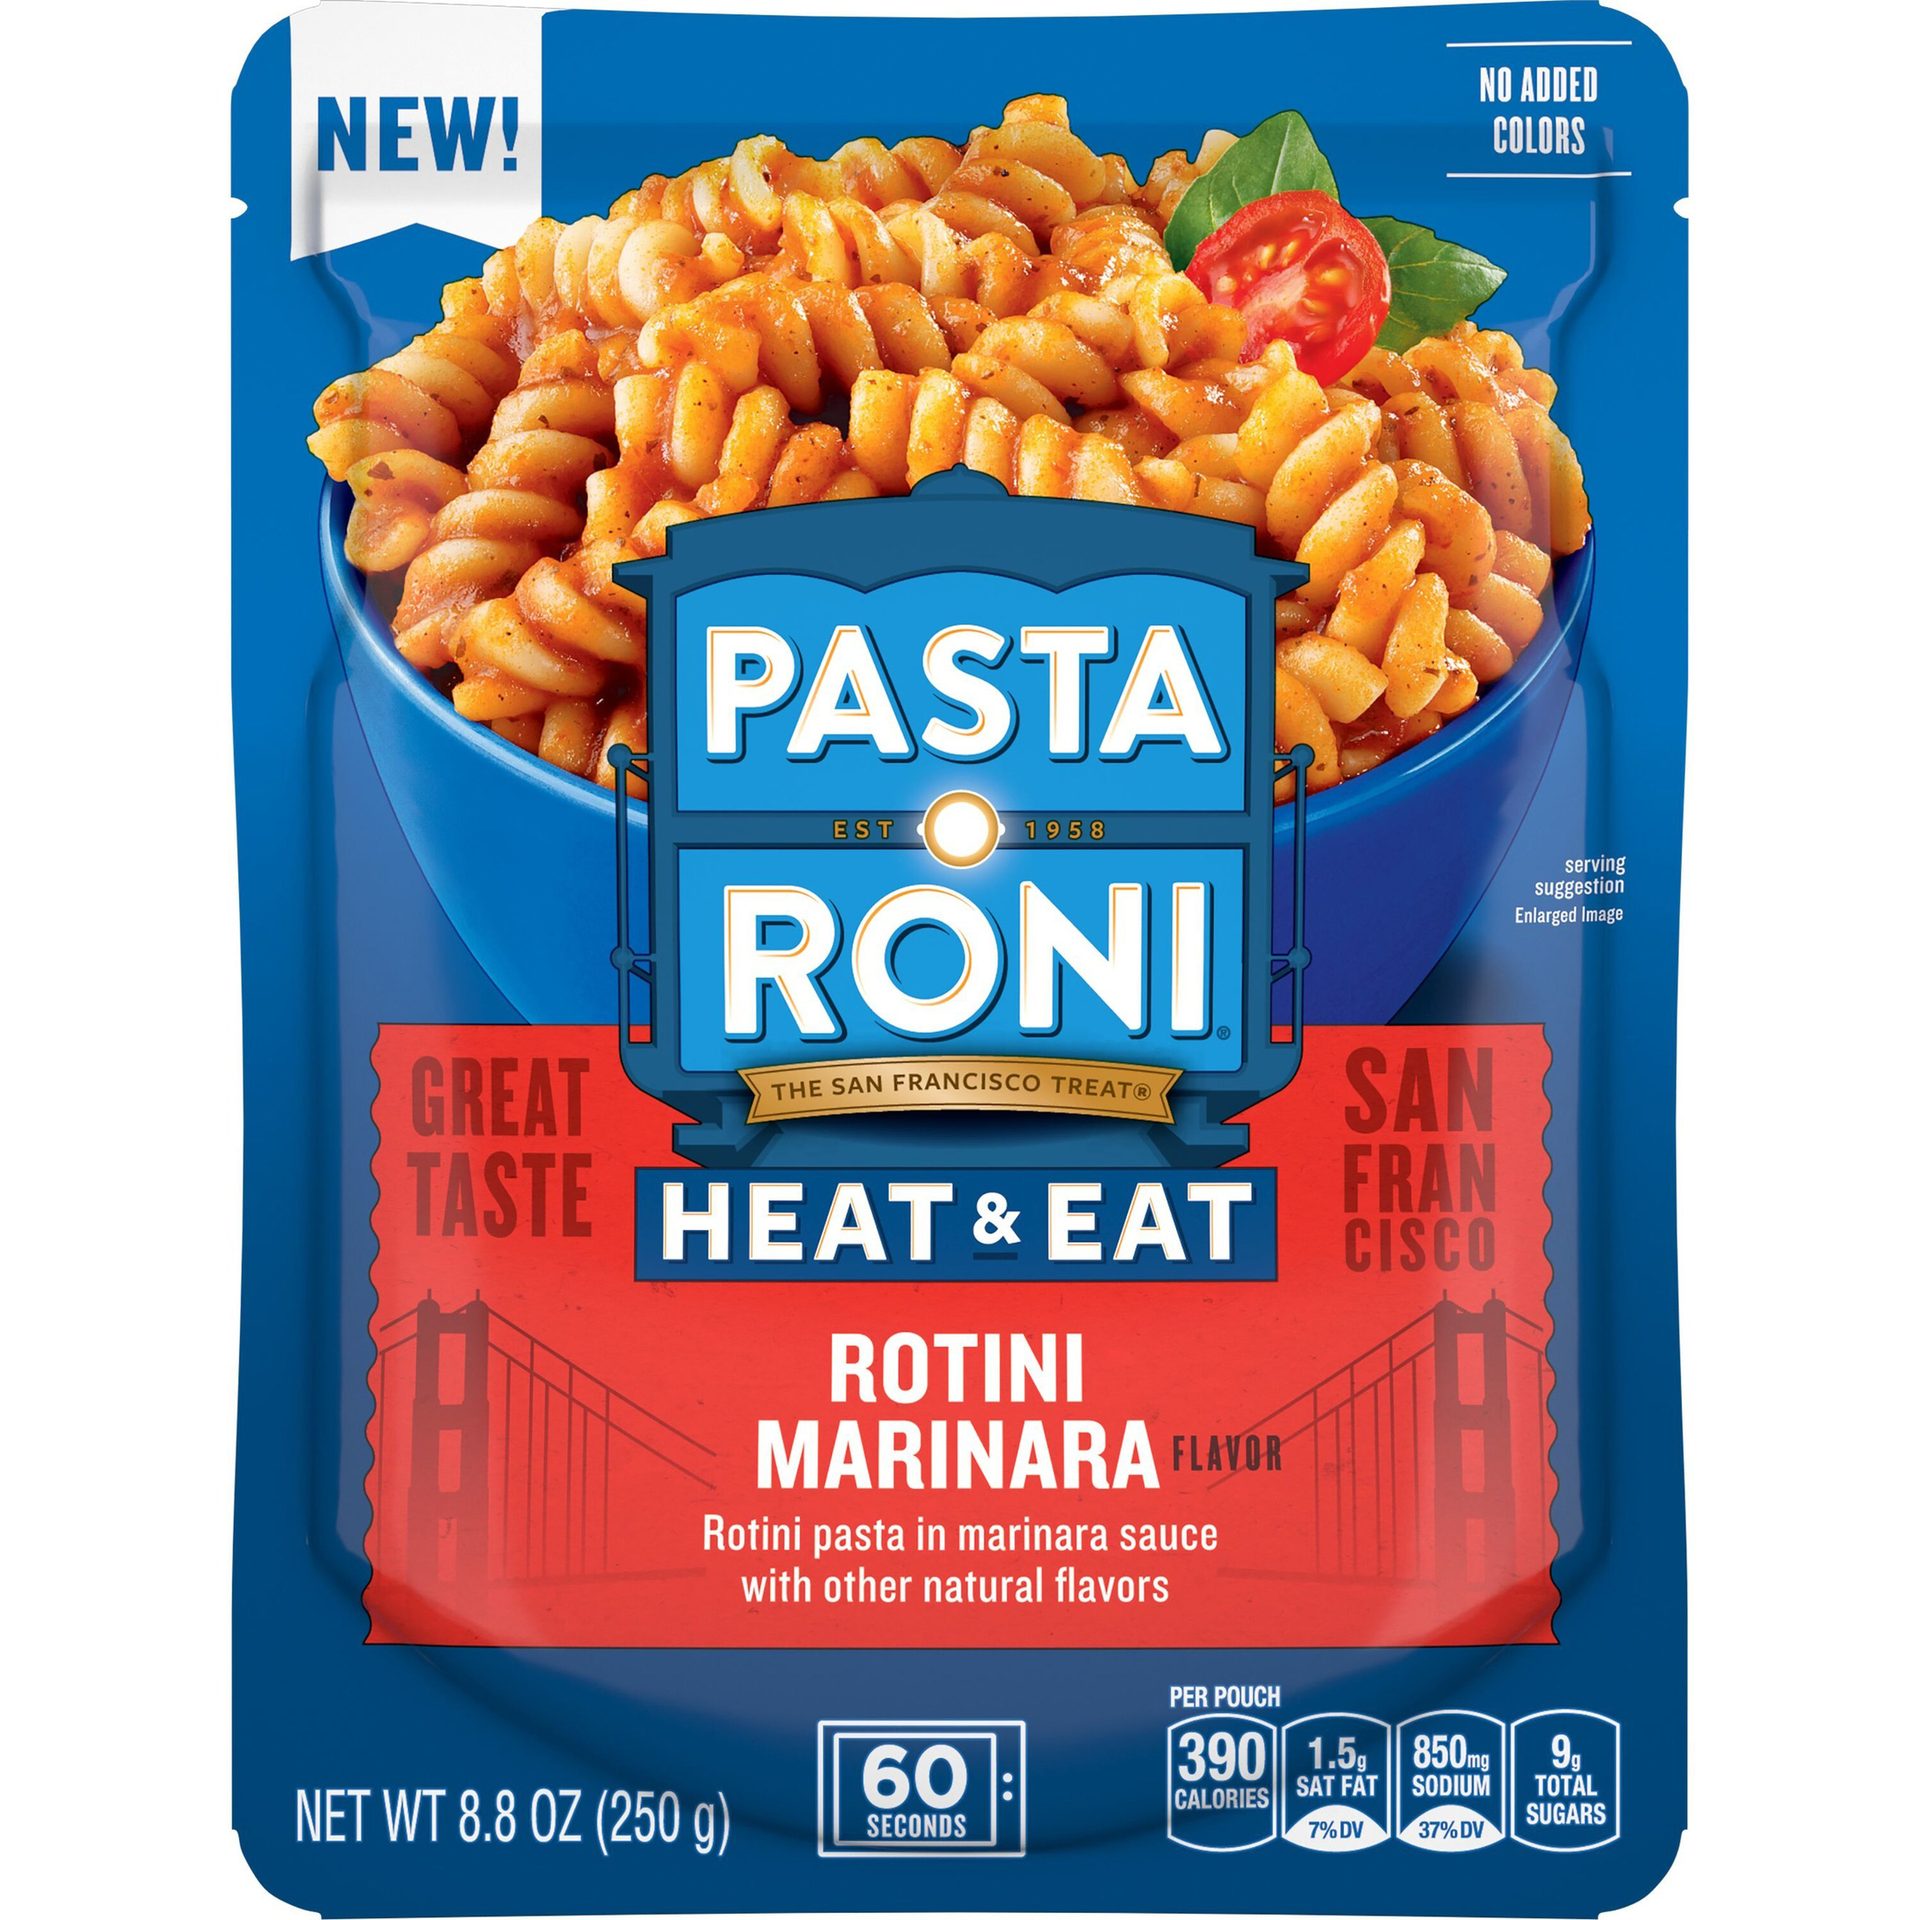 Pasta Roni Heat  Eat Rotini Marinara